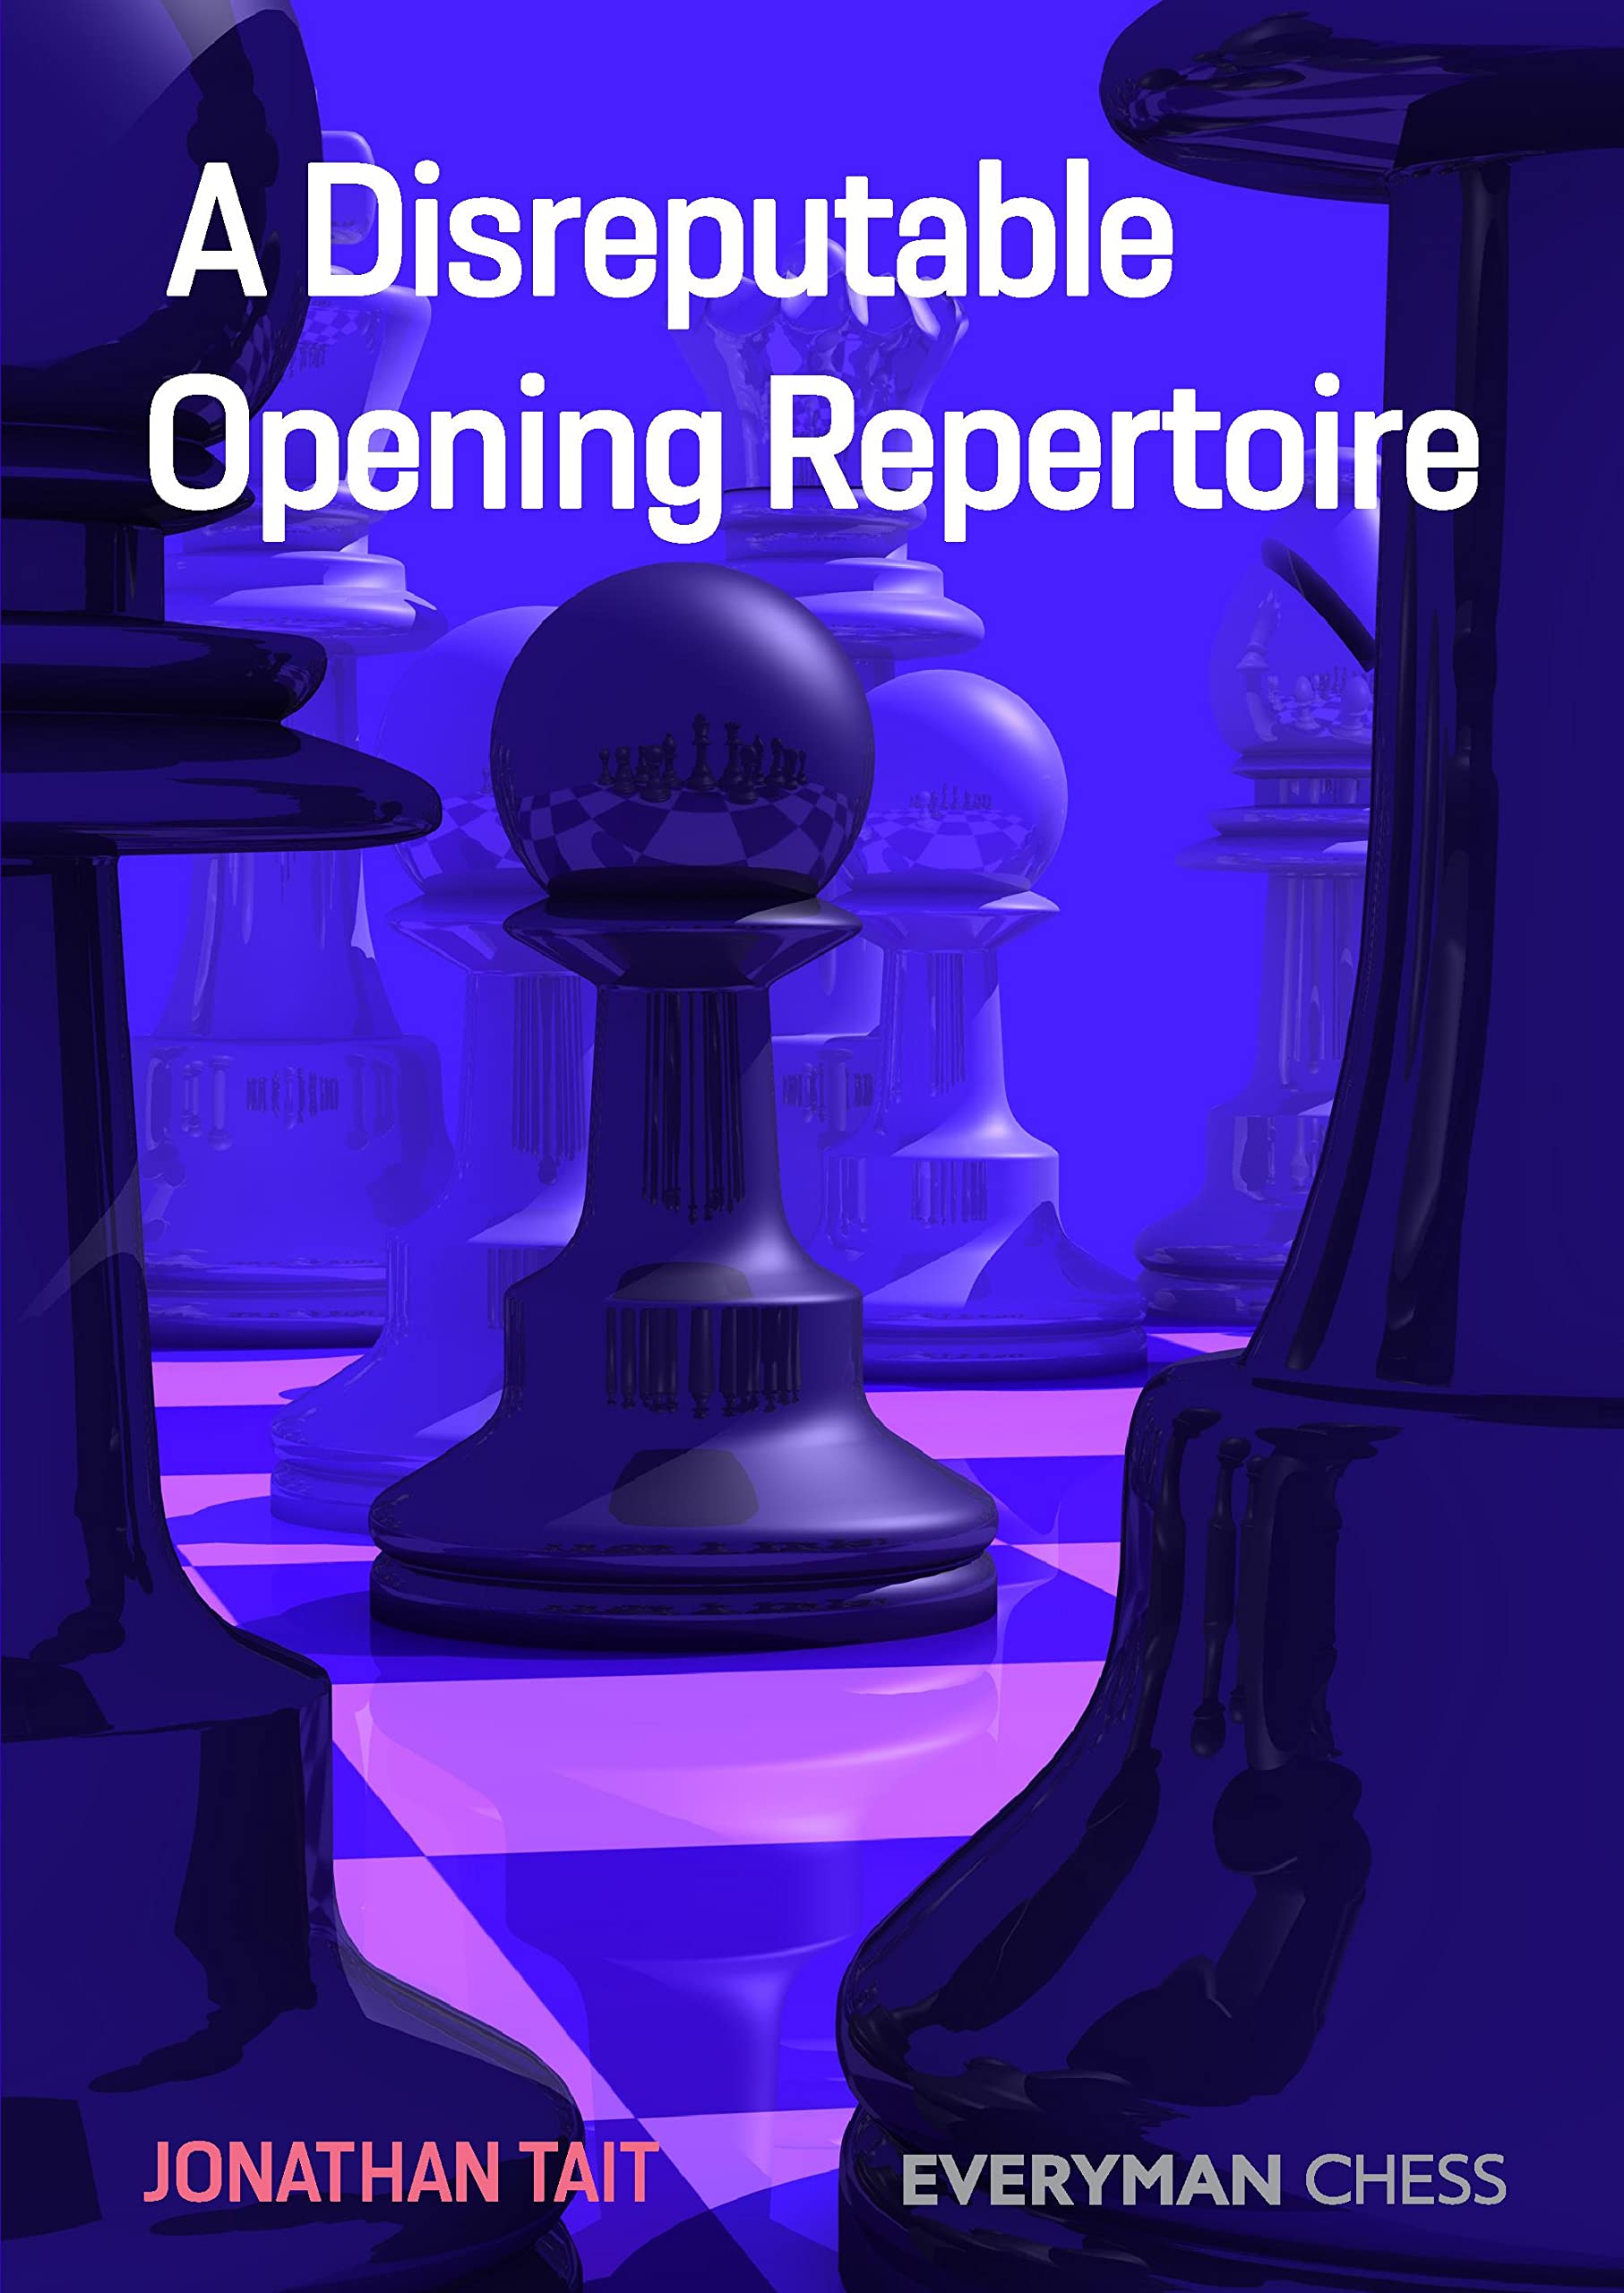 A Disreputable Opening Repertoire, Jonathan Tait, Everyman Chess, 14 Jan. 2022, ISBN-13 ‏ : ‎ 978-1781946060